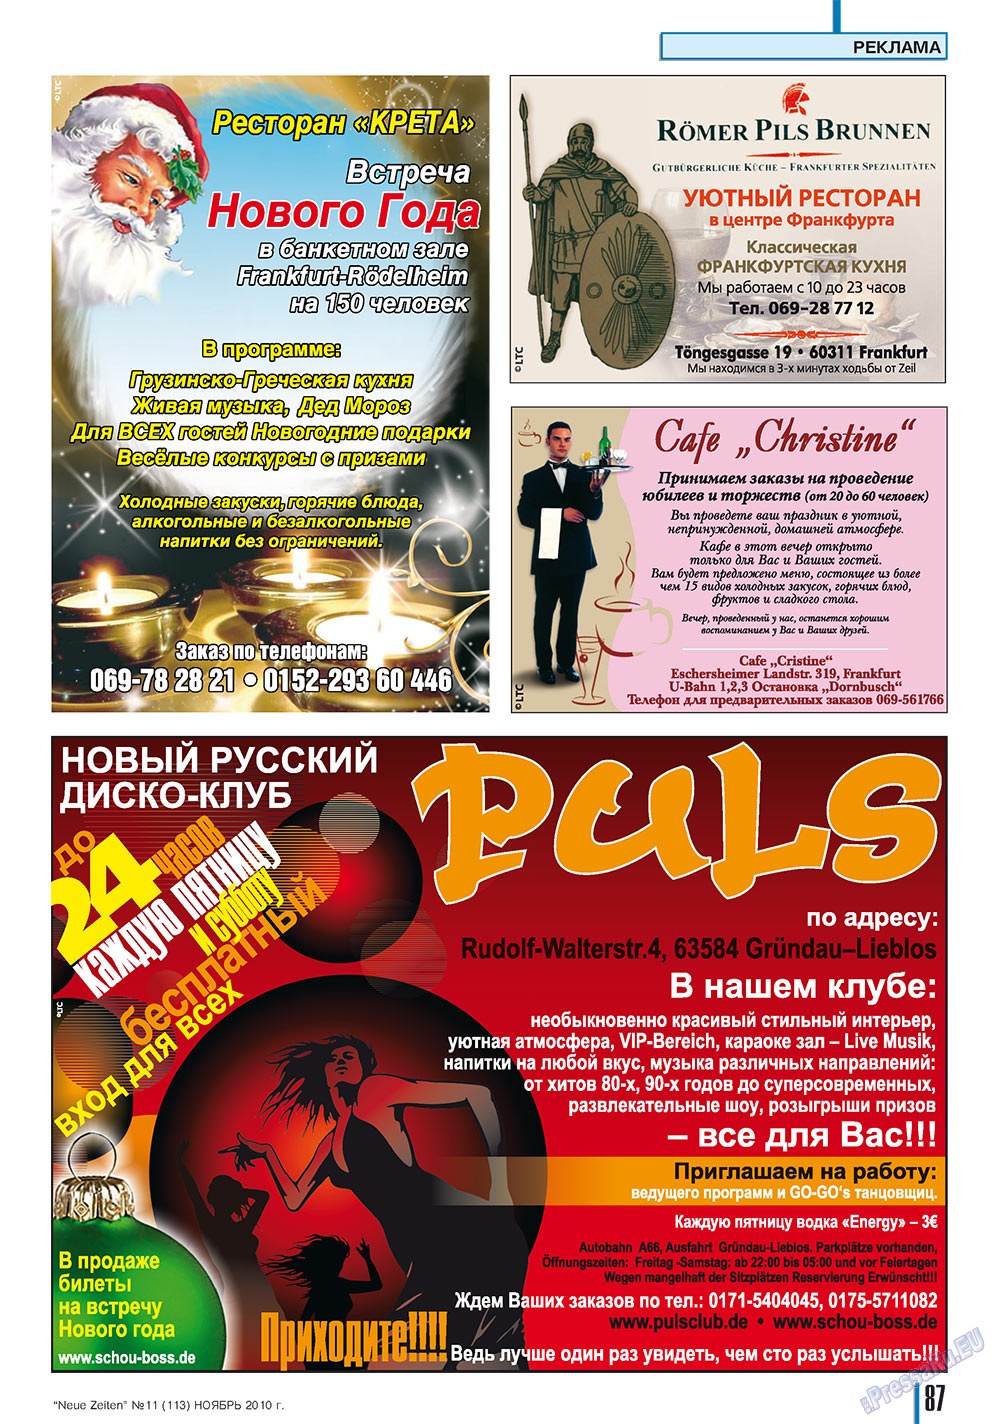 Neue Zeiten (журнал). 2010 год, номер 11, стр. 87